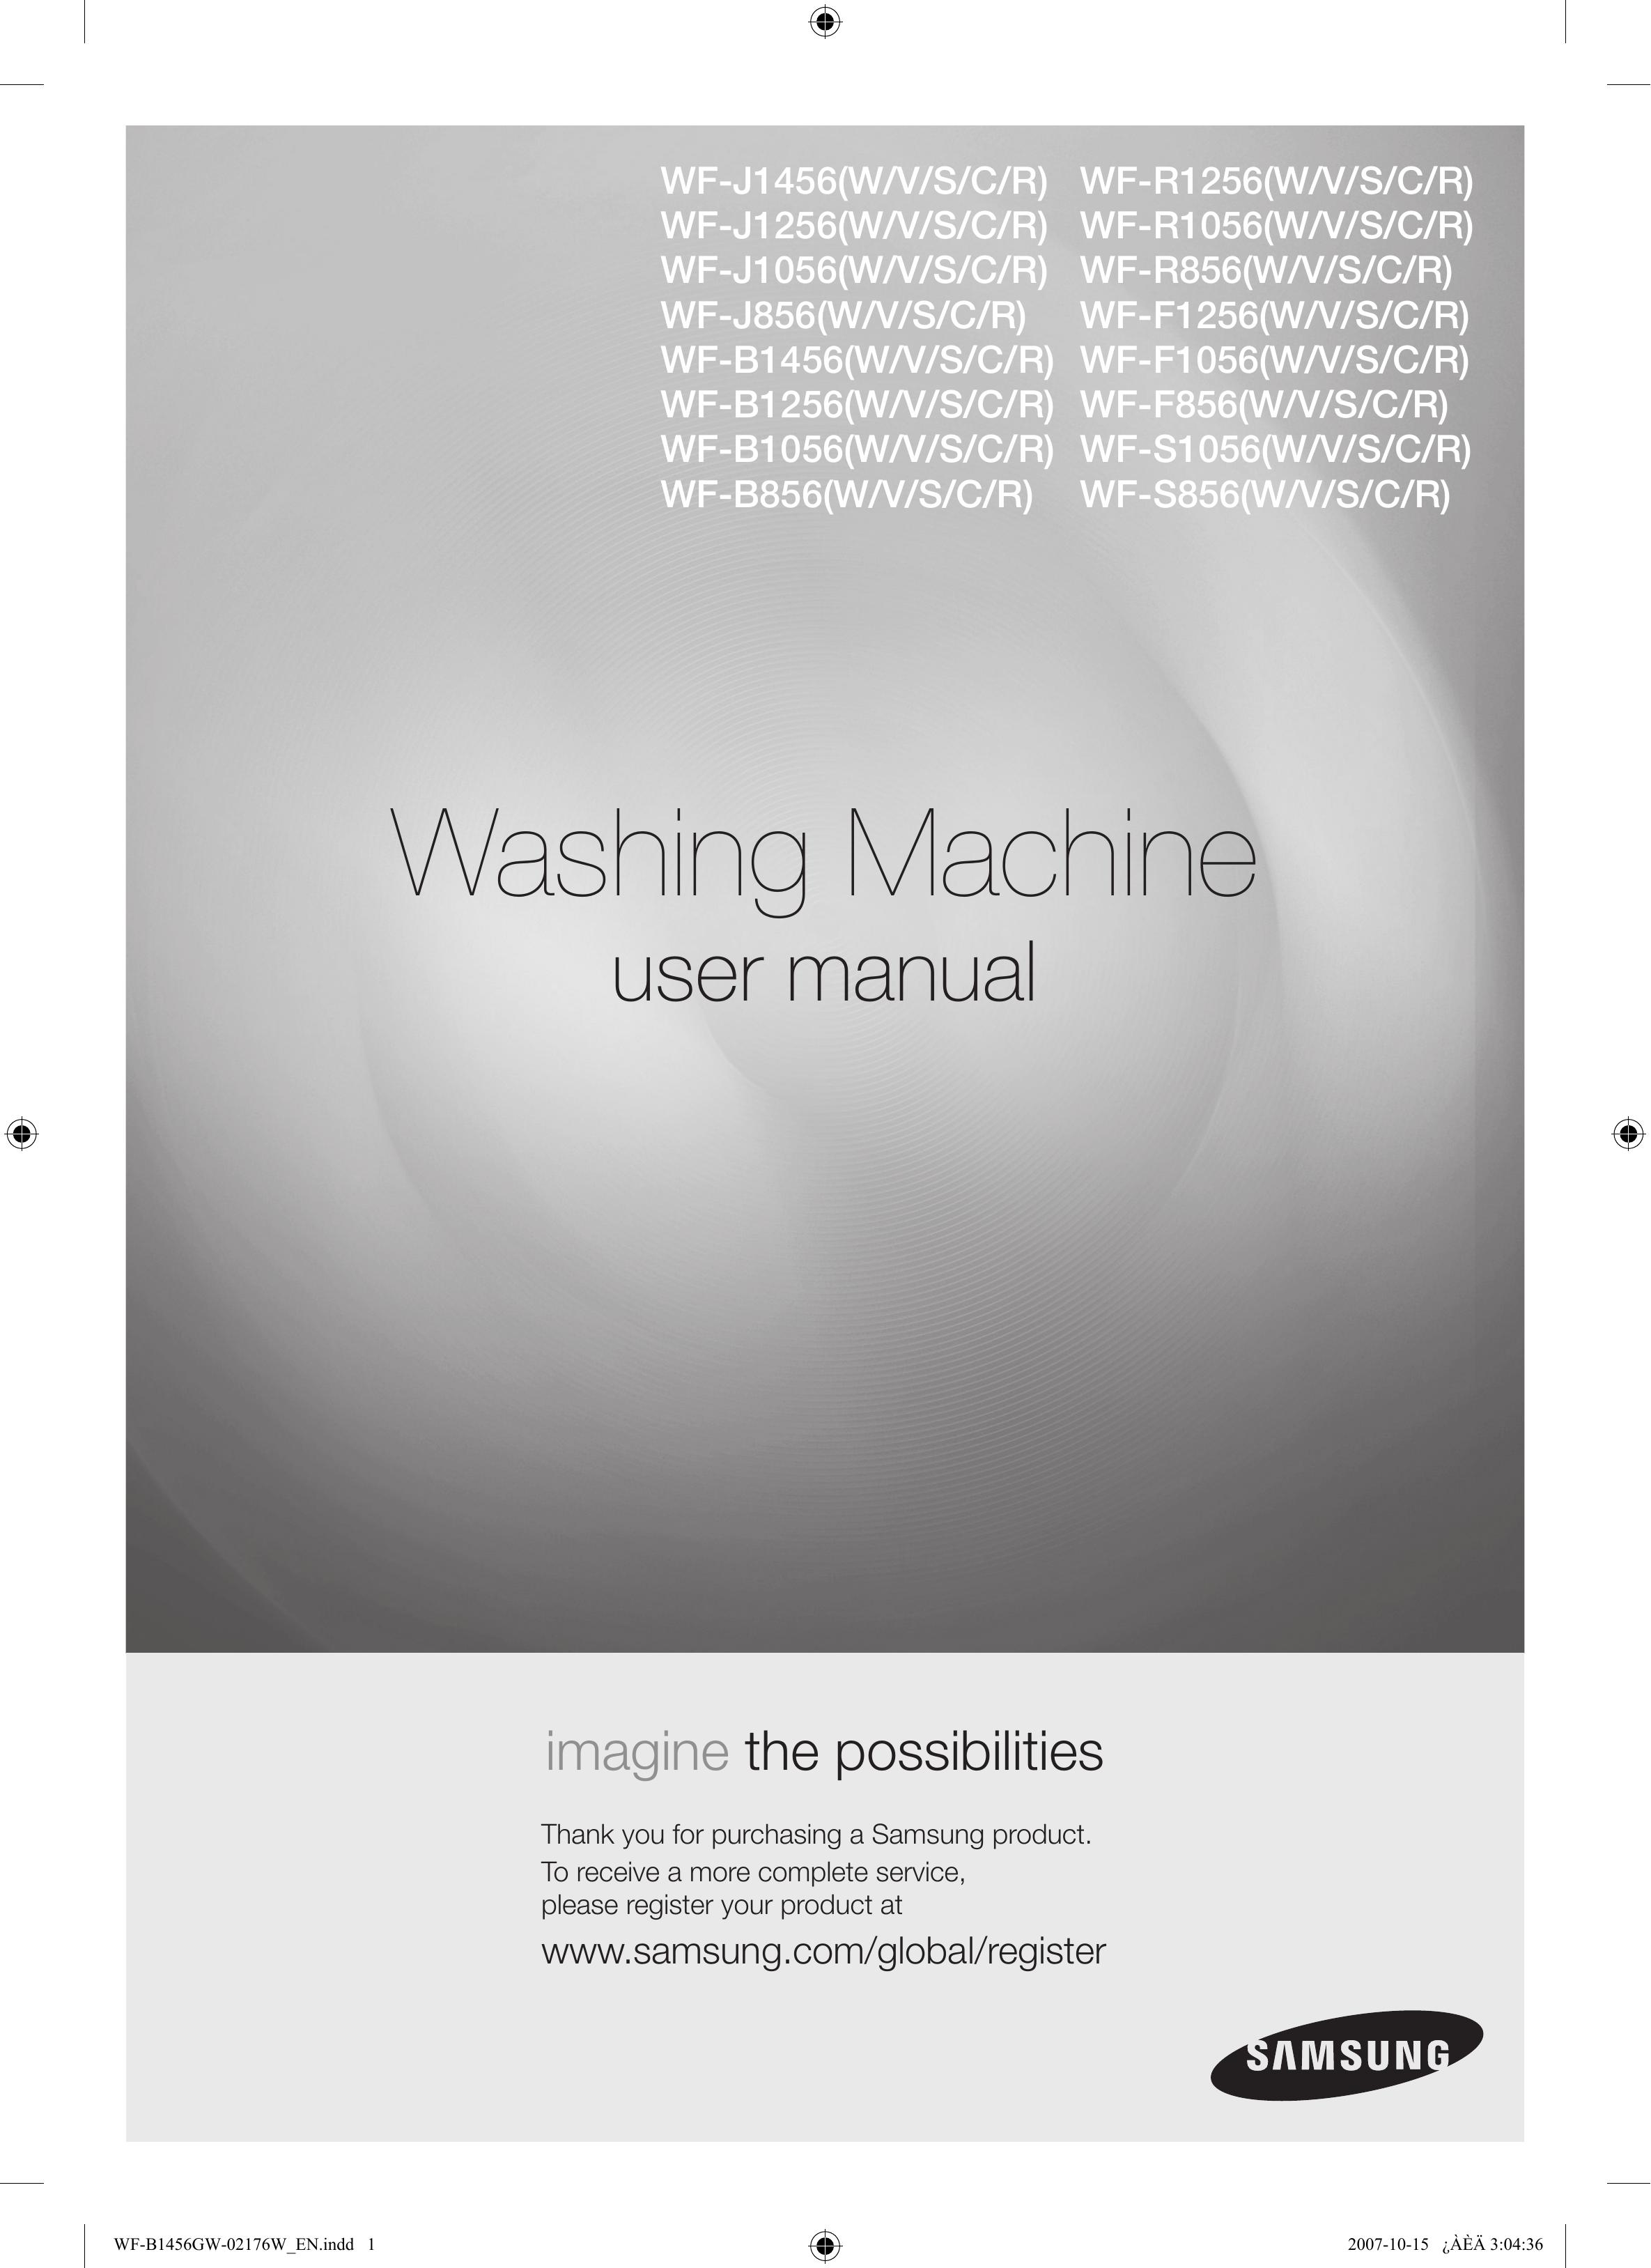 Samsung WF-B856 Washer/Dryer User Manual